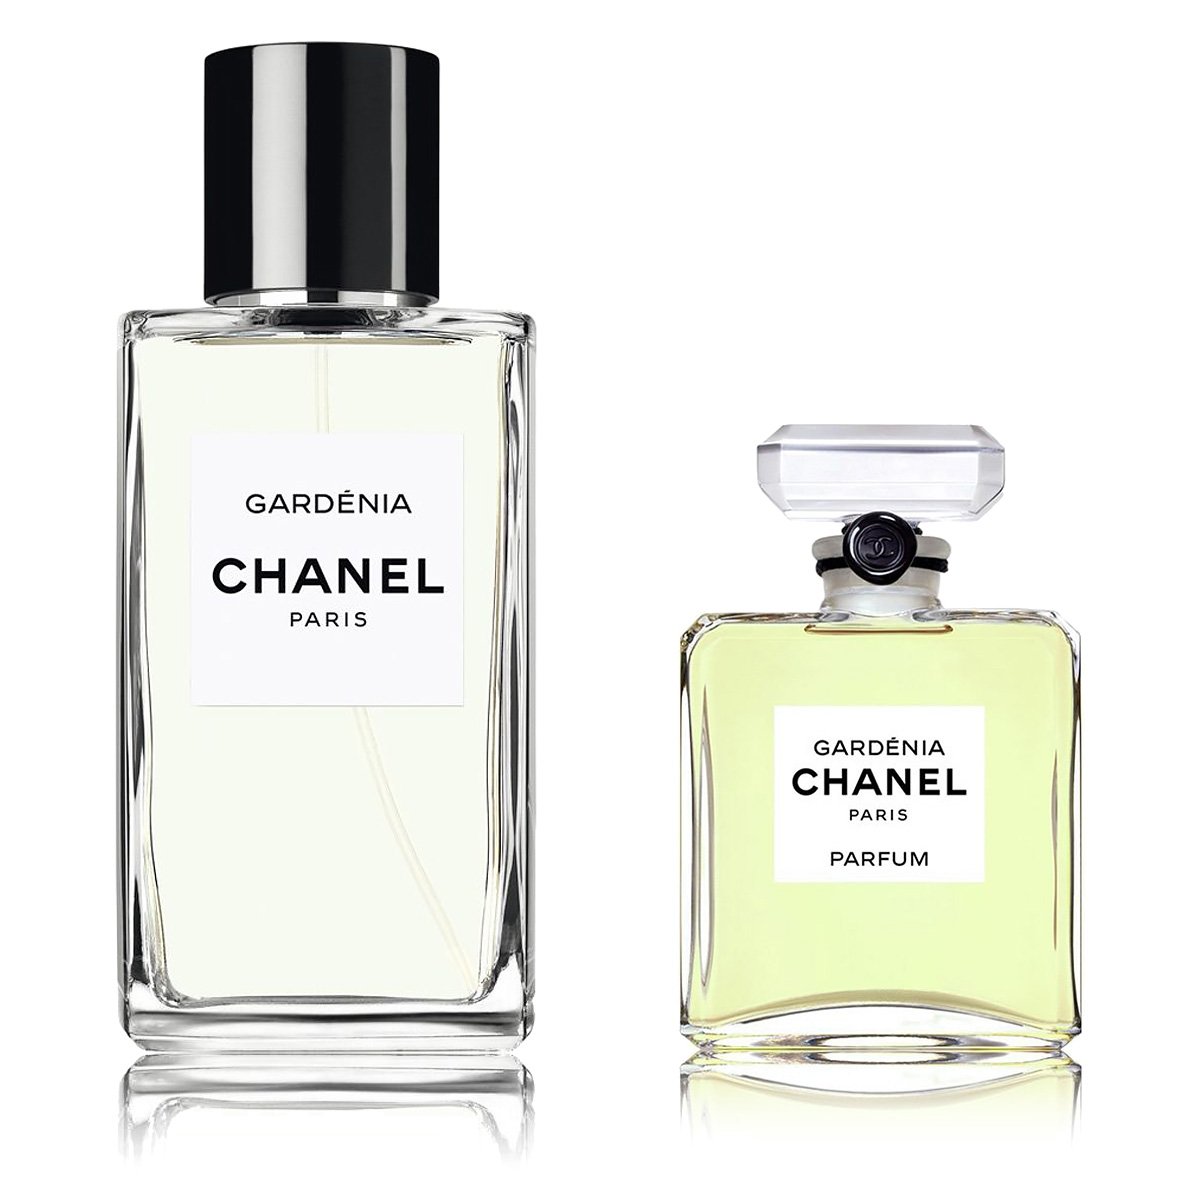 Chanel Les Exclusifs de Chanel Gardenia купить в Минске и РБ